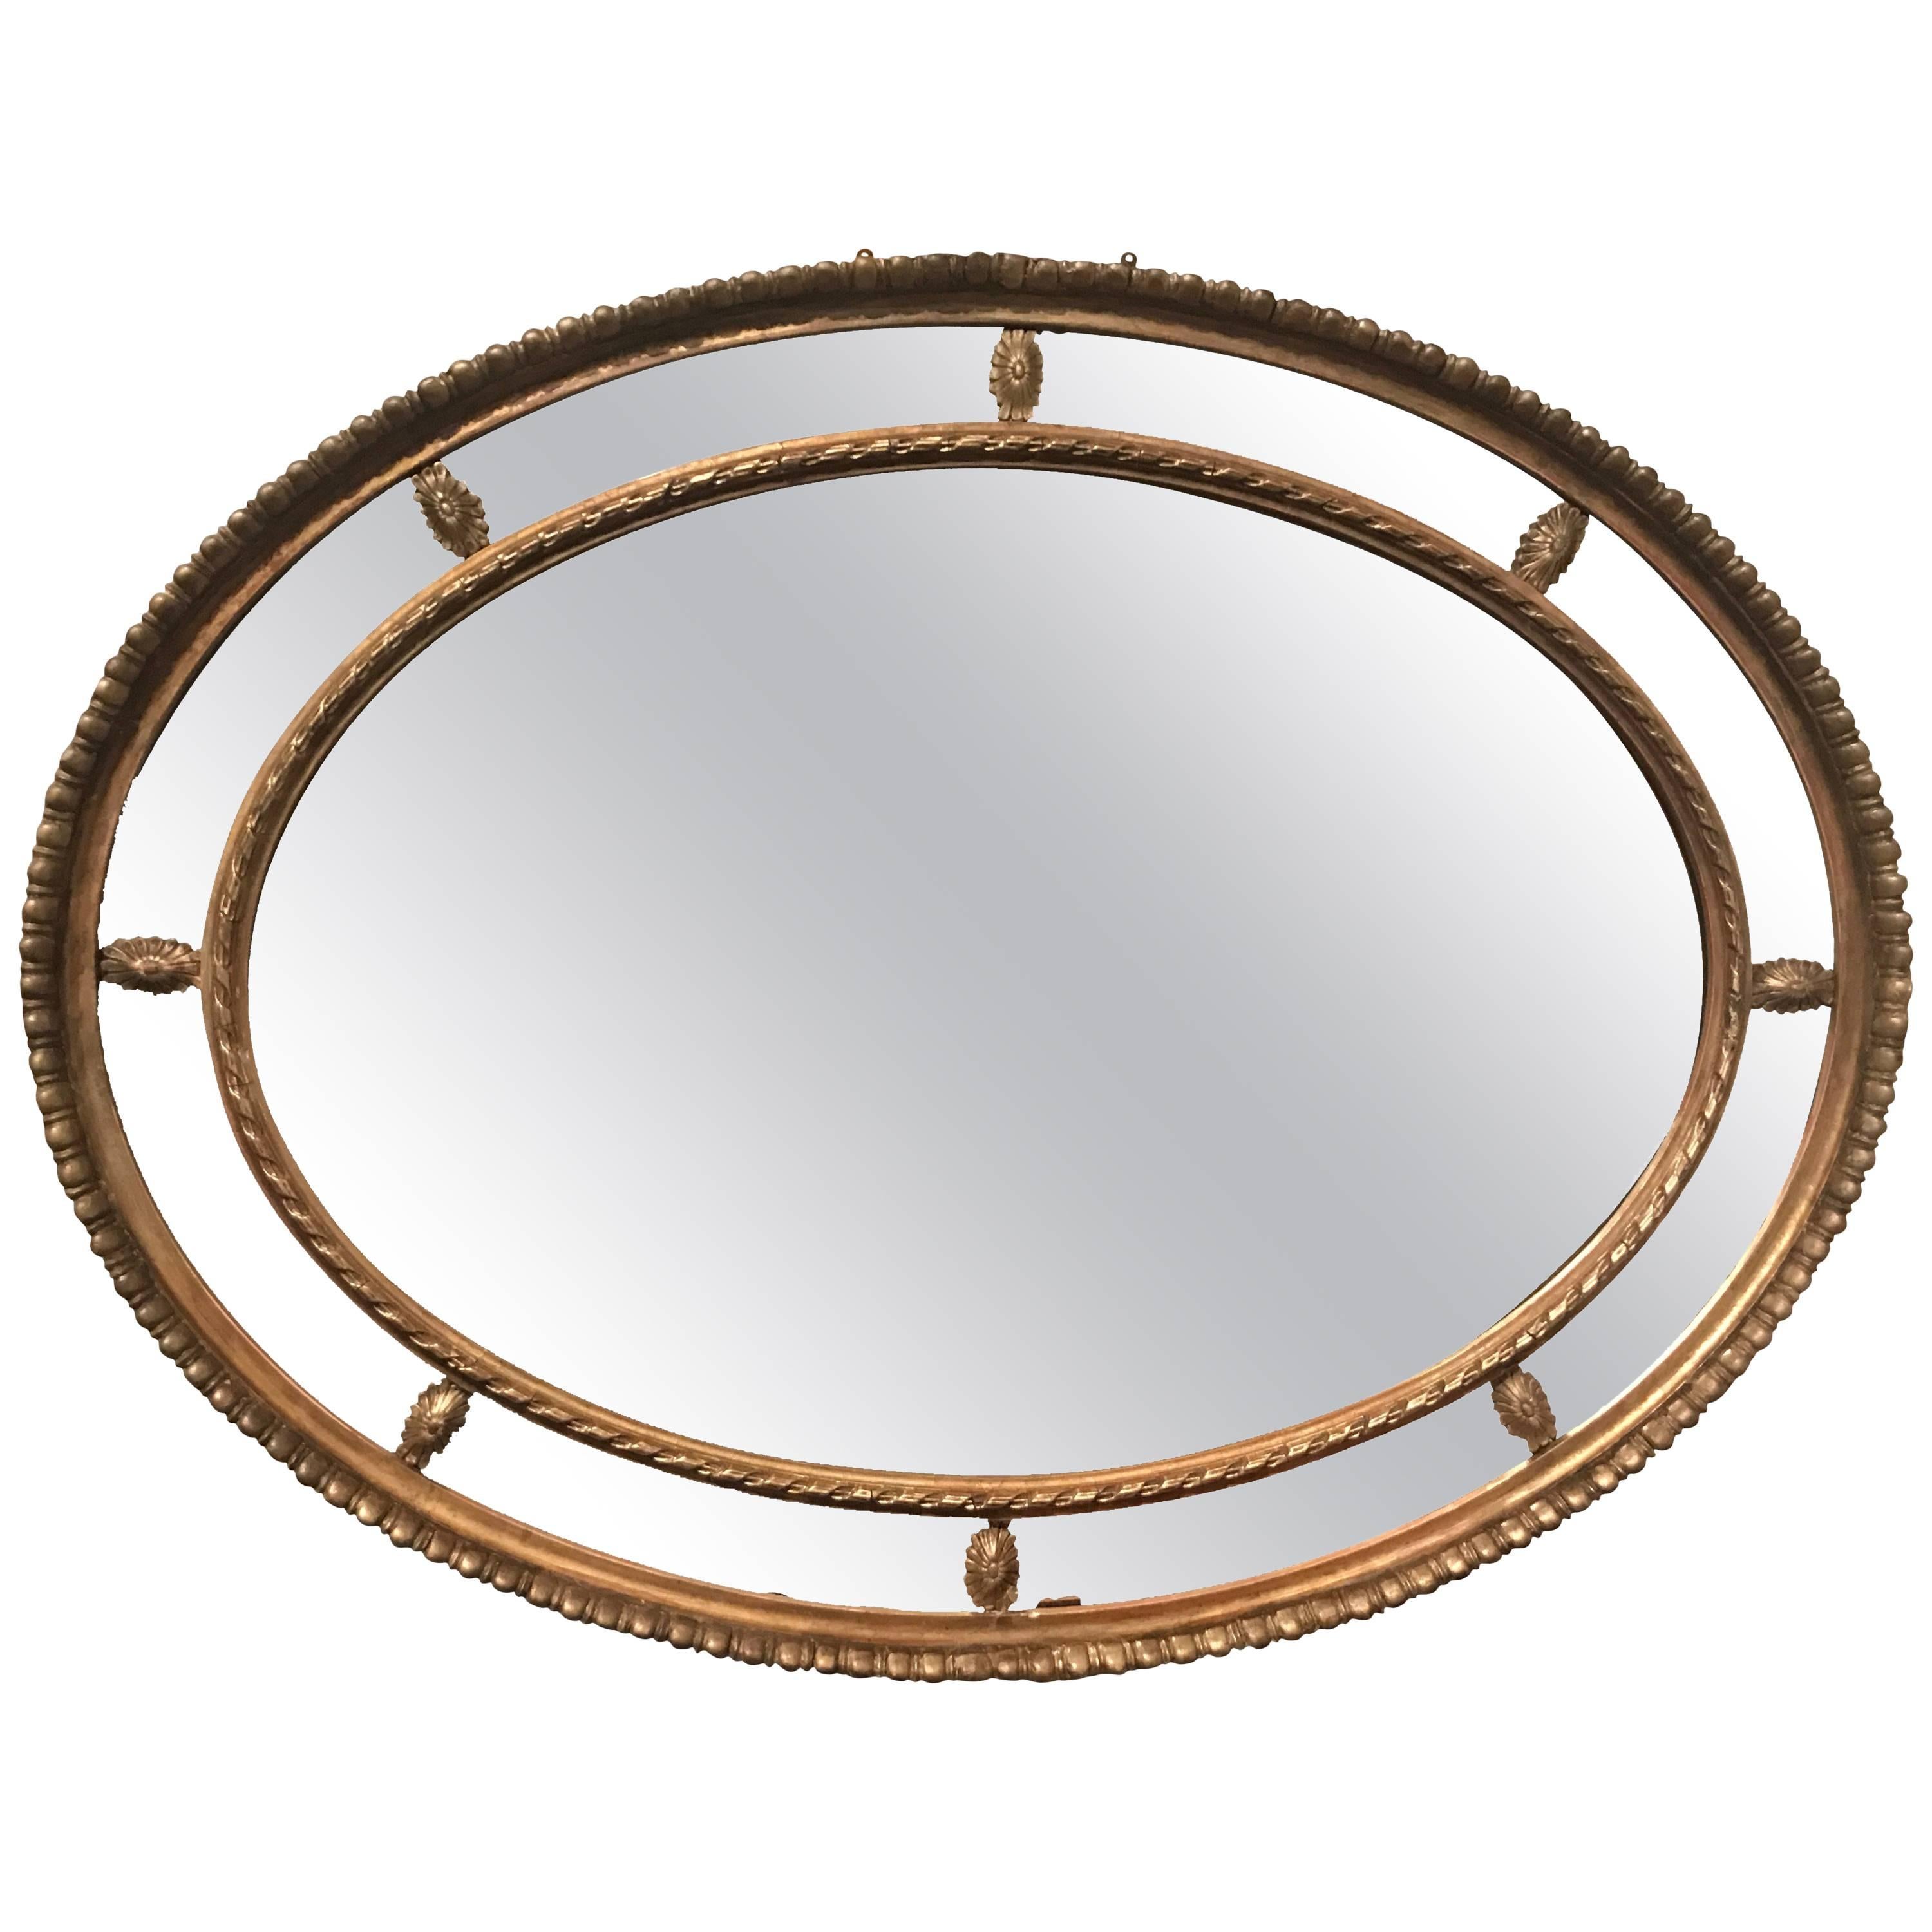 Early 20th Century Oval Segmented Gilt Mirror